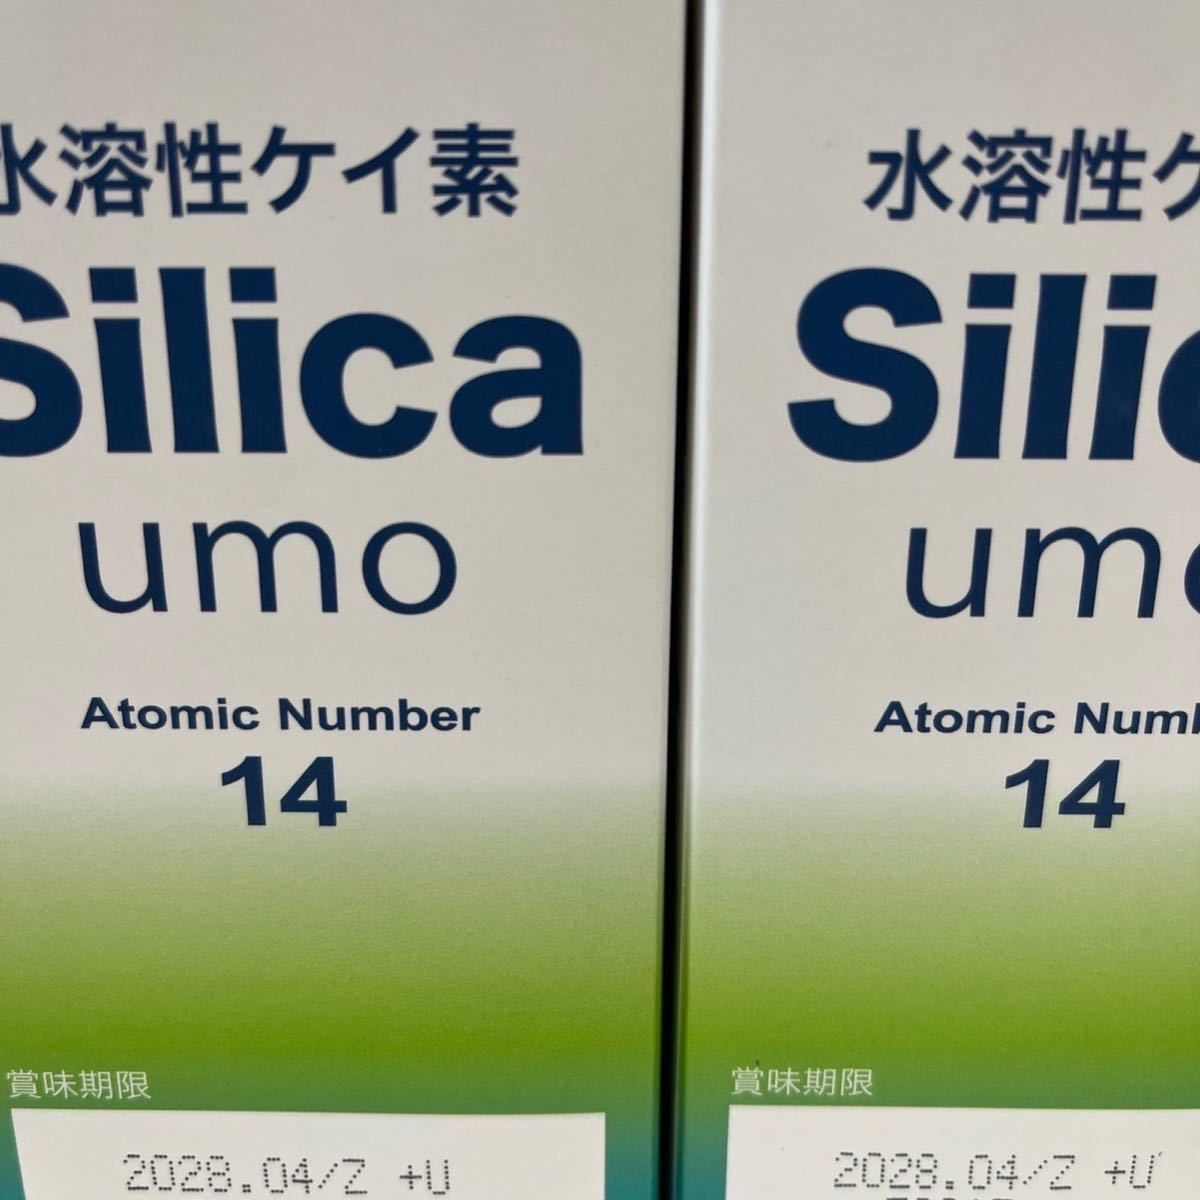 [ new goods ] 2 pcs set water .. Kei element ... fluid silica umo. element * regular price 21,600 jpy 